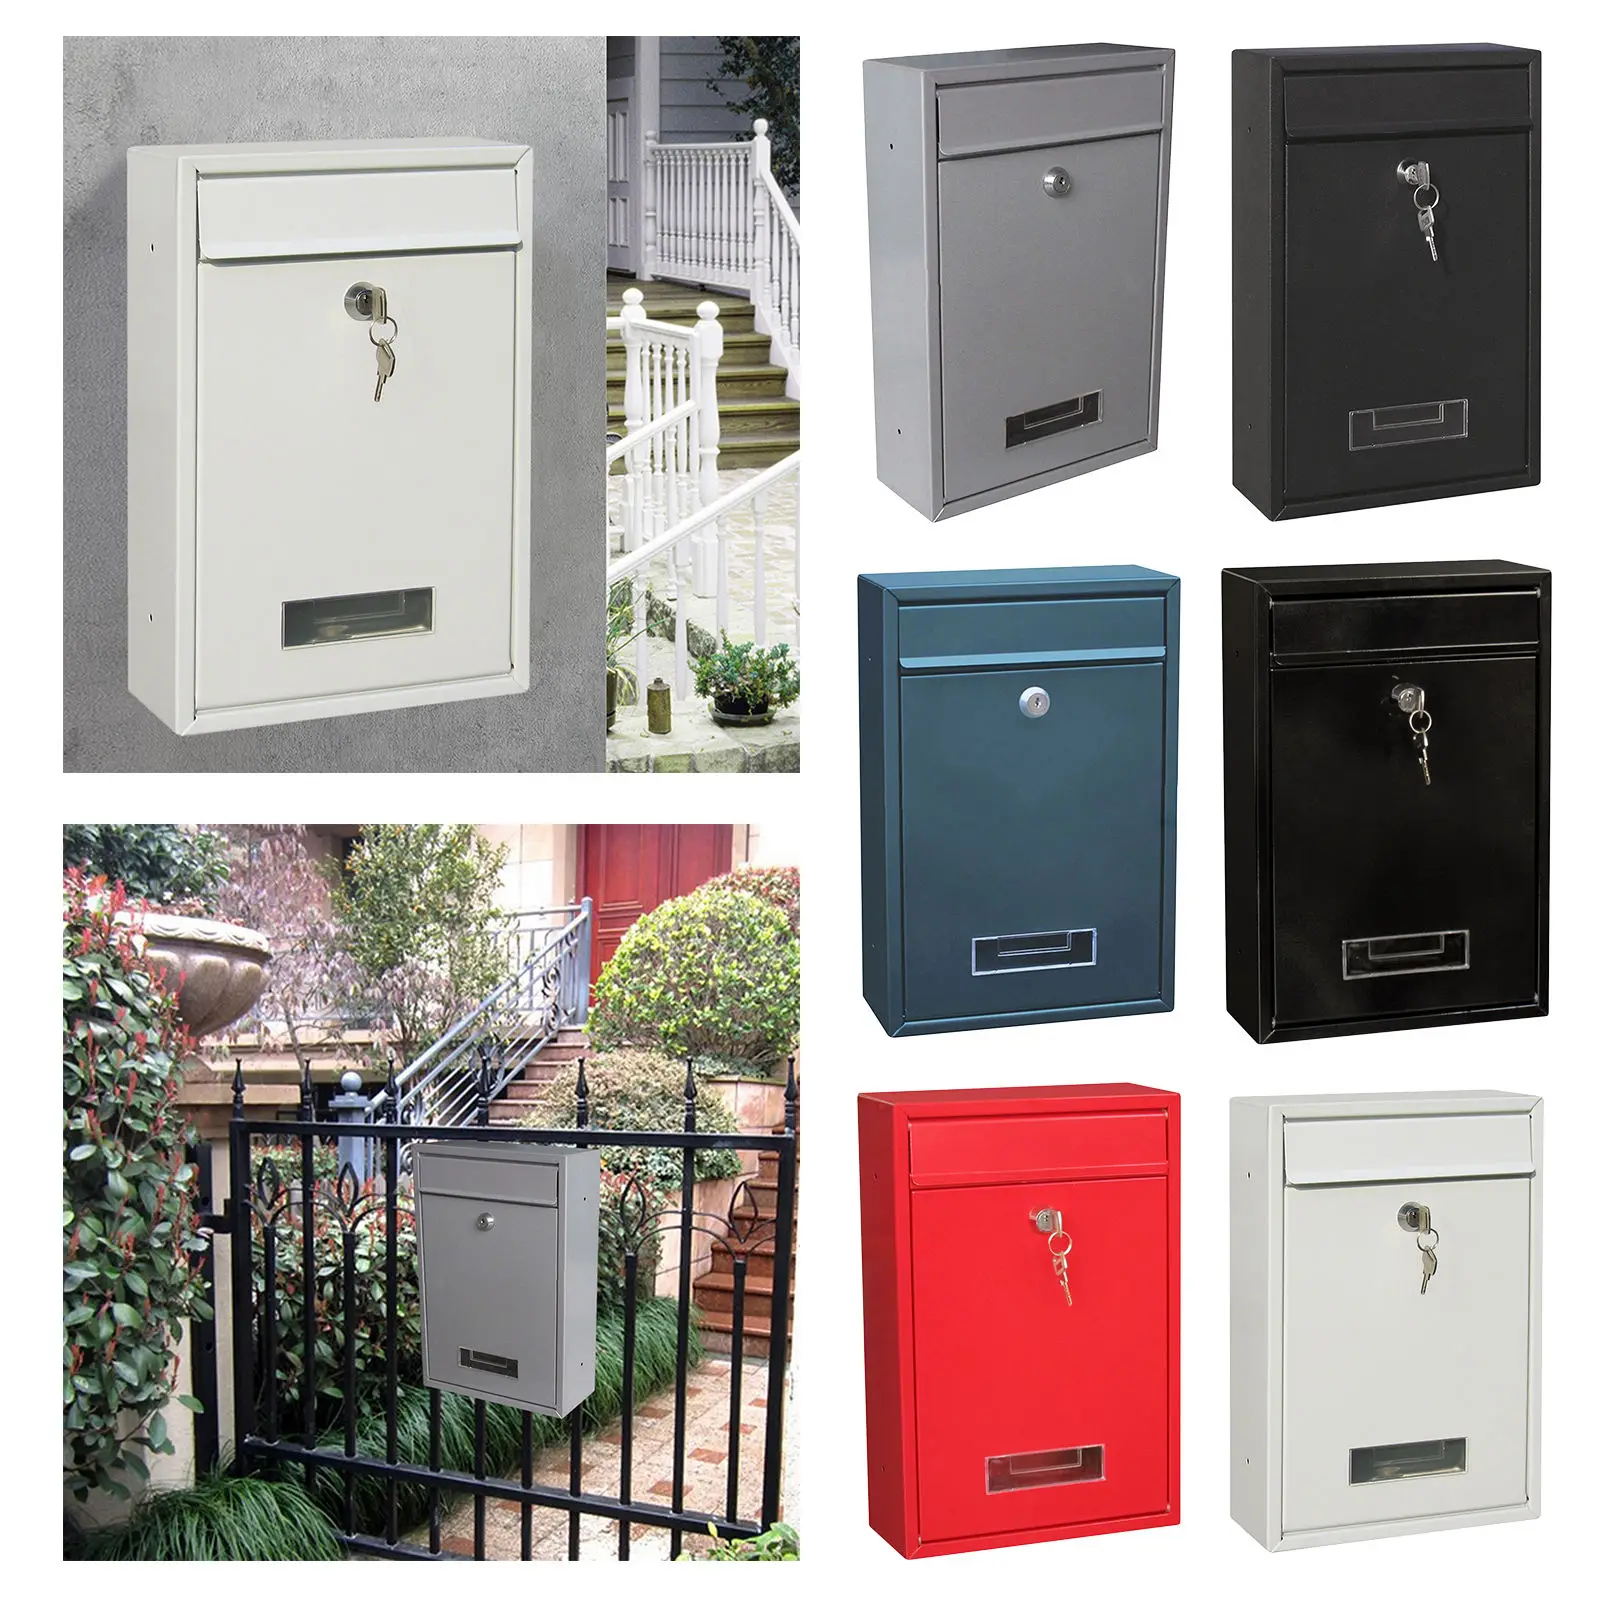 

Mailbox Wall-mounted Anti-rust Post Mail Rainproof Lockable Mail Box 2 Keys Gate Decorative Suggestion Box